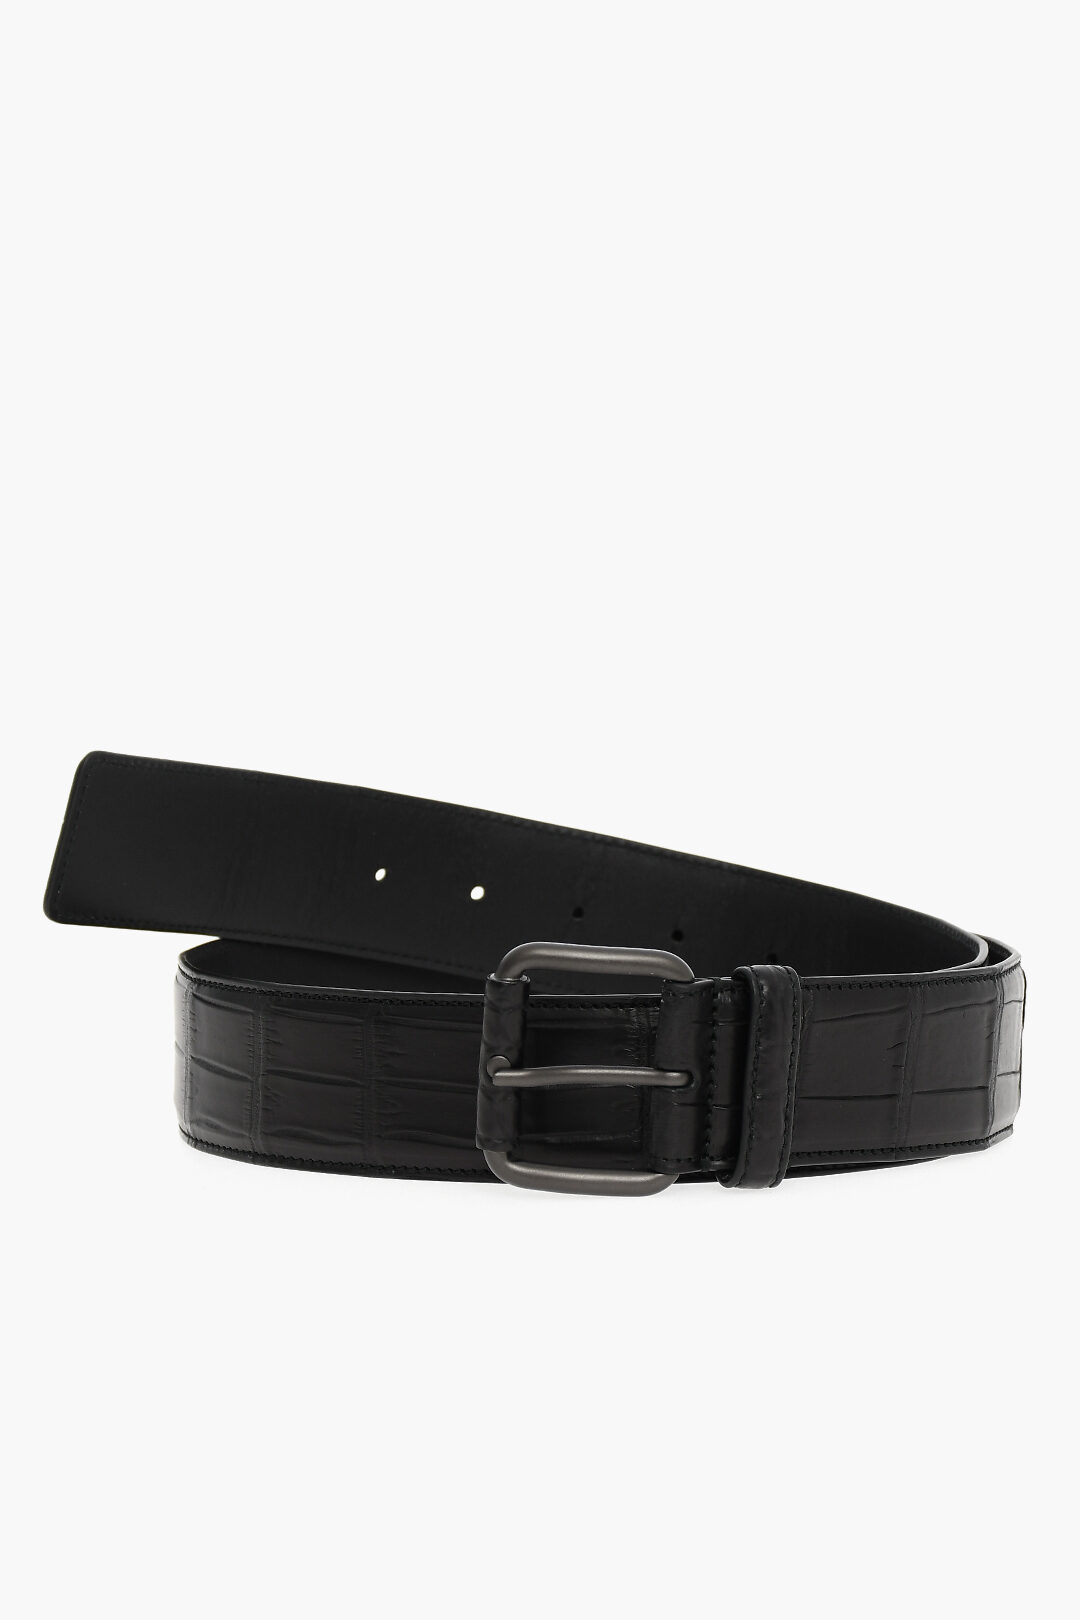 Ermenegildo Zegna EZ TAILORING 30mm reversible leather belt men - Glamood  Outlet